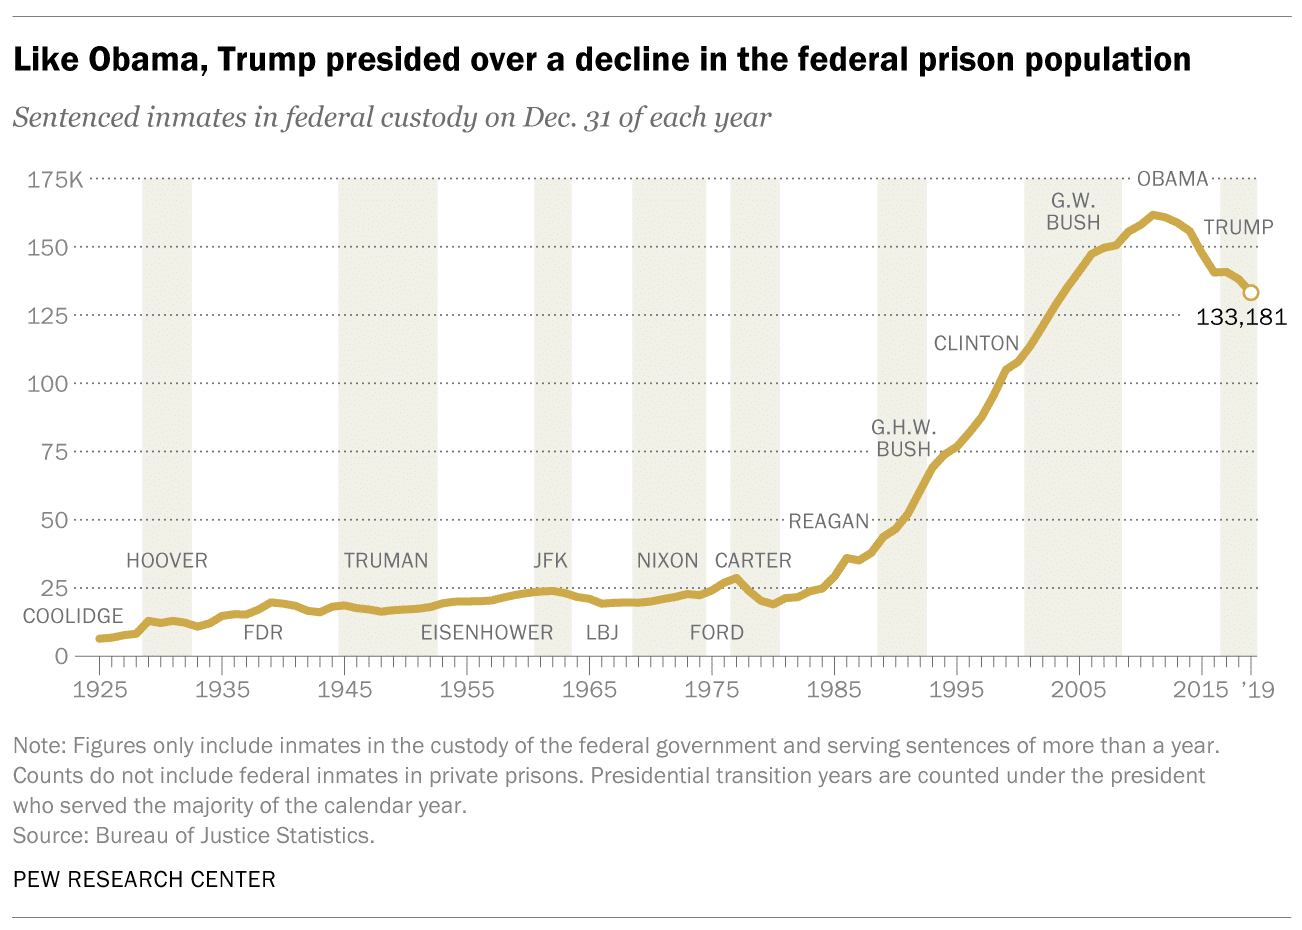 Prison population fell under Obama and Trump